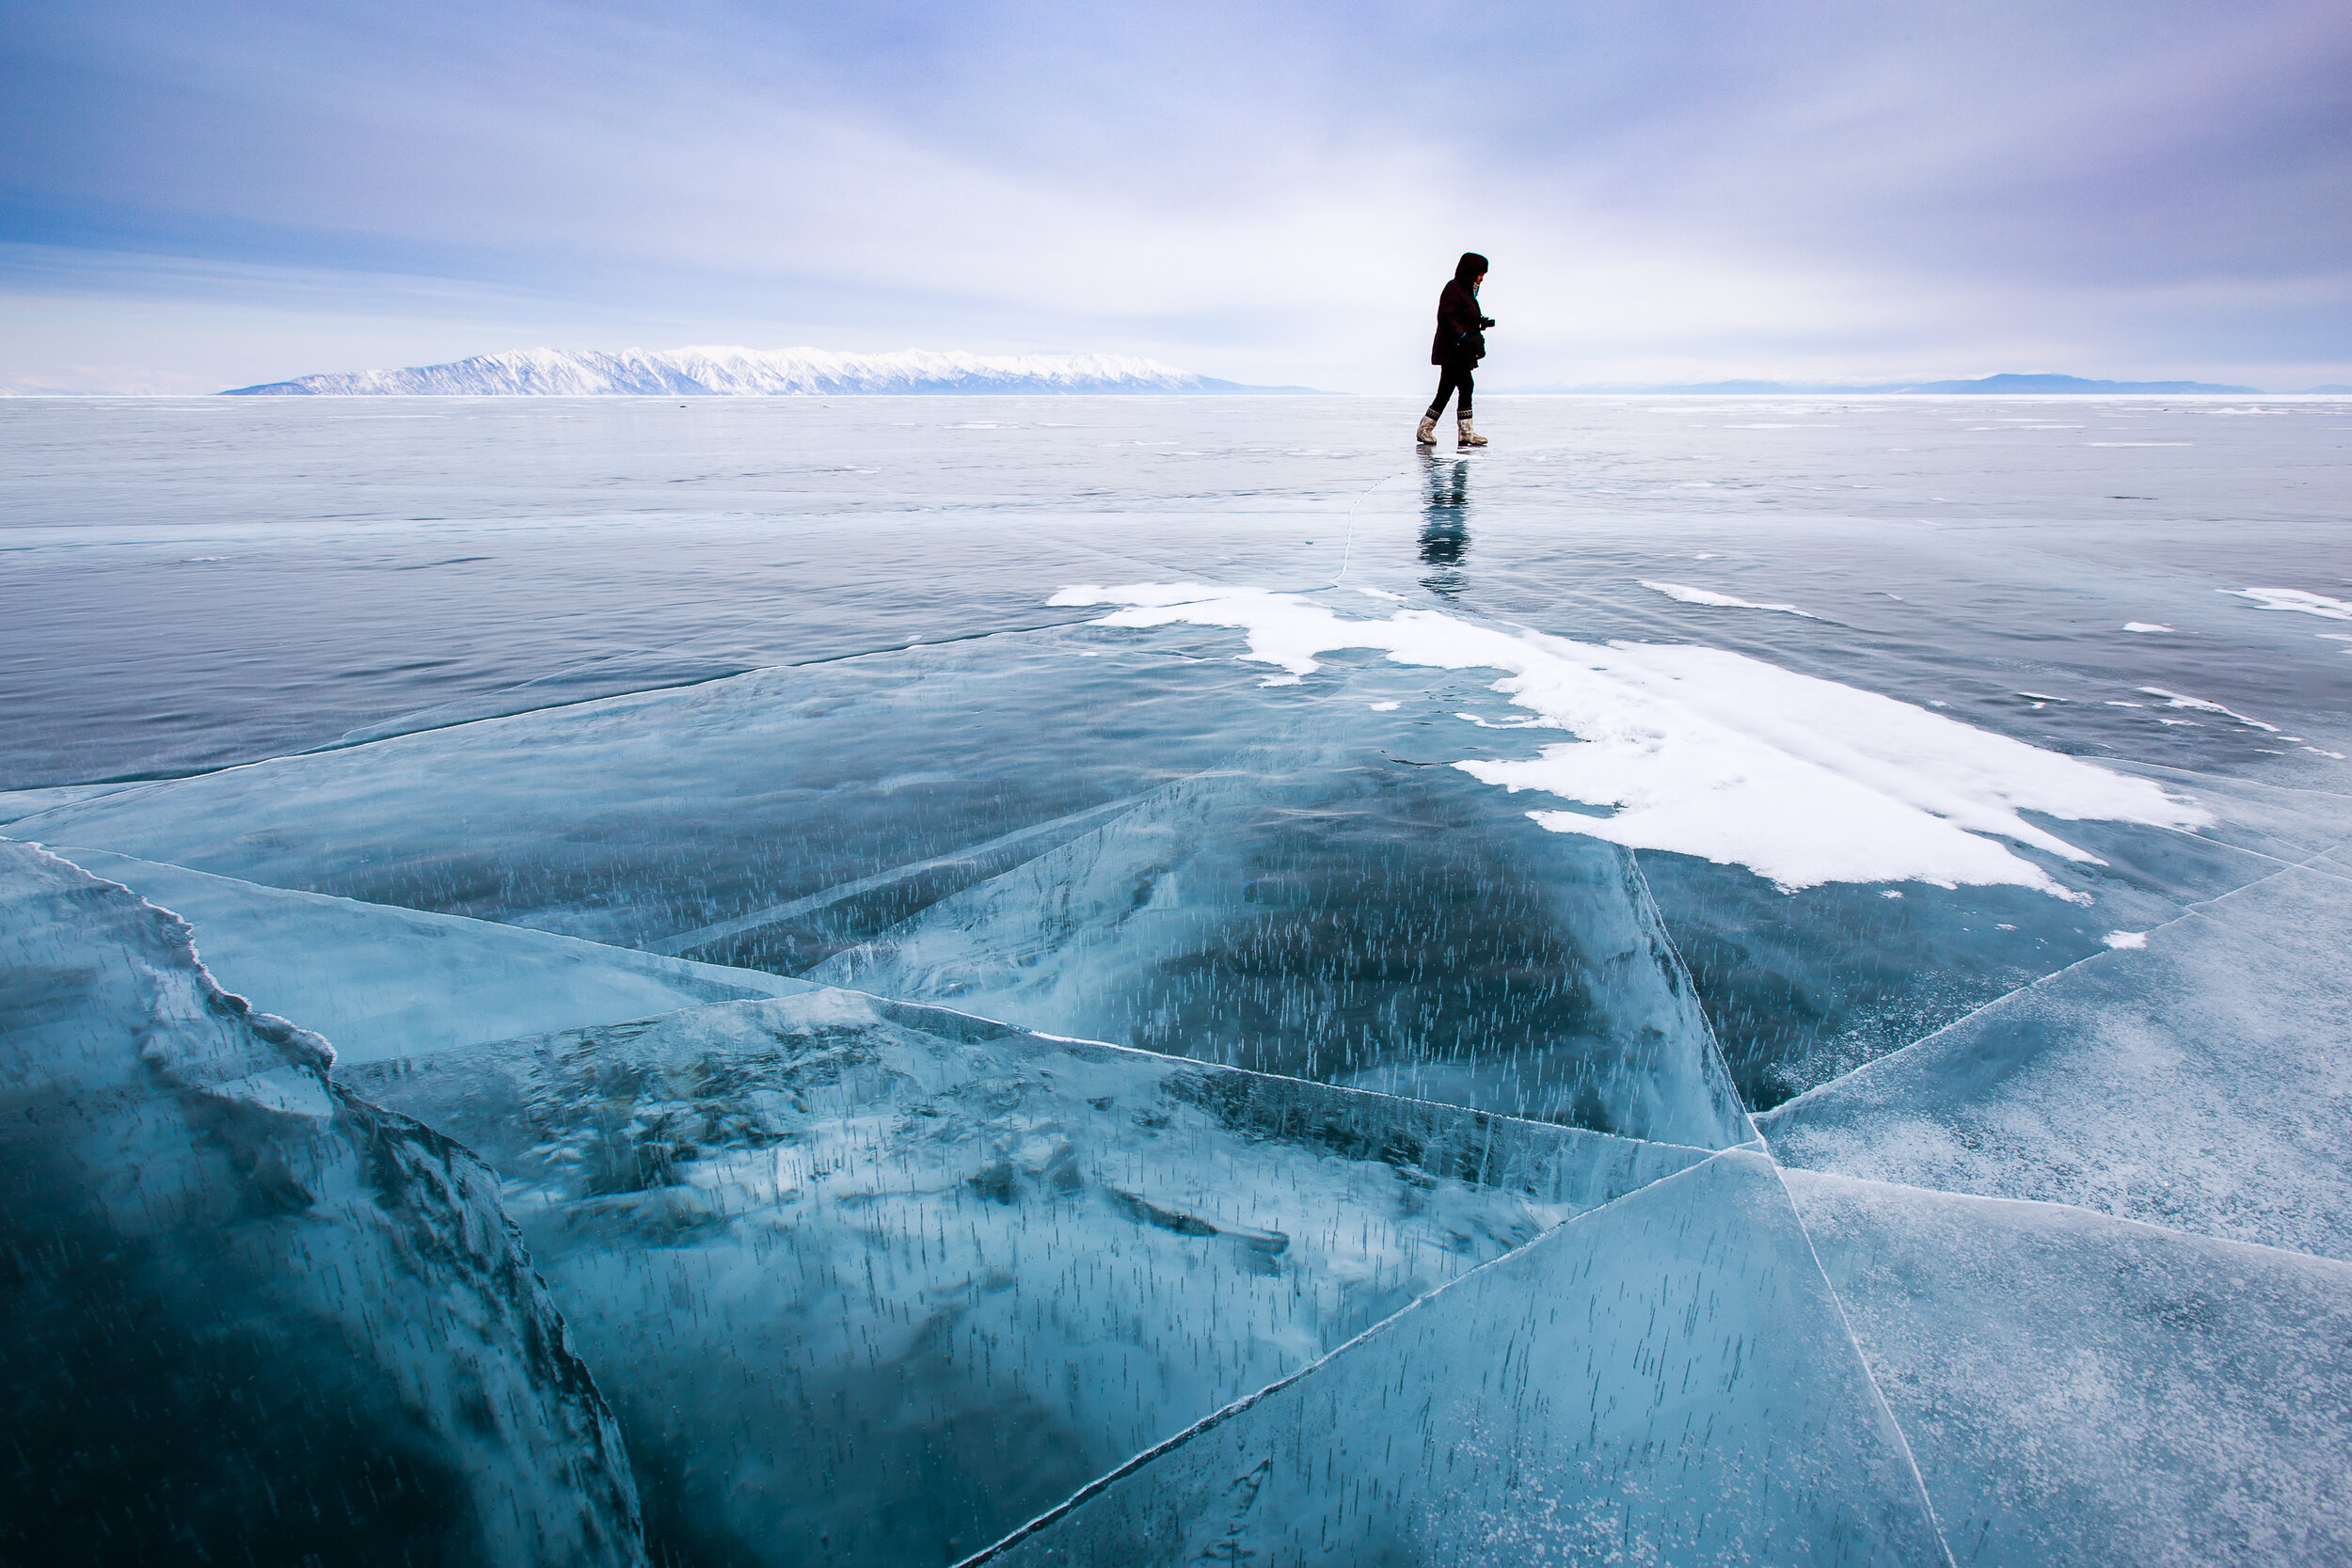 Лоб лед. Озеро Байкал лед. Замерзшее озеро. Ледяное озеро. Байкал зимой.